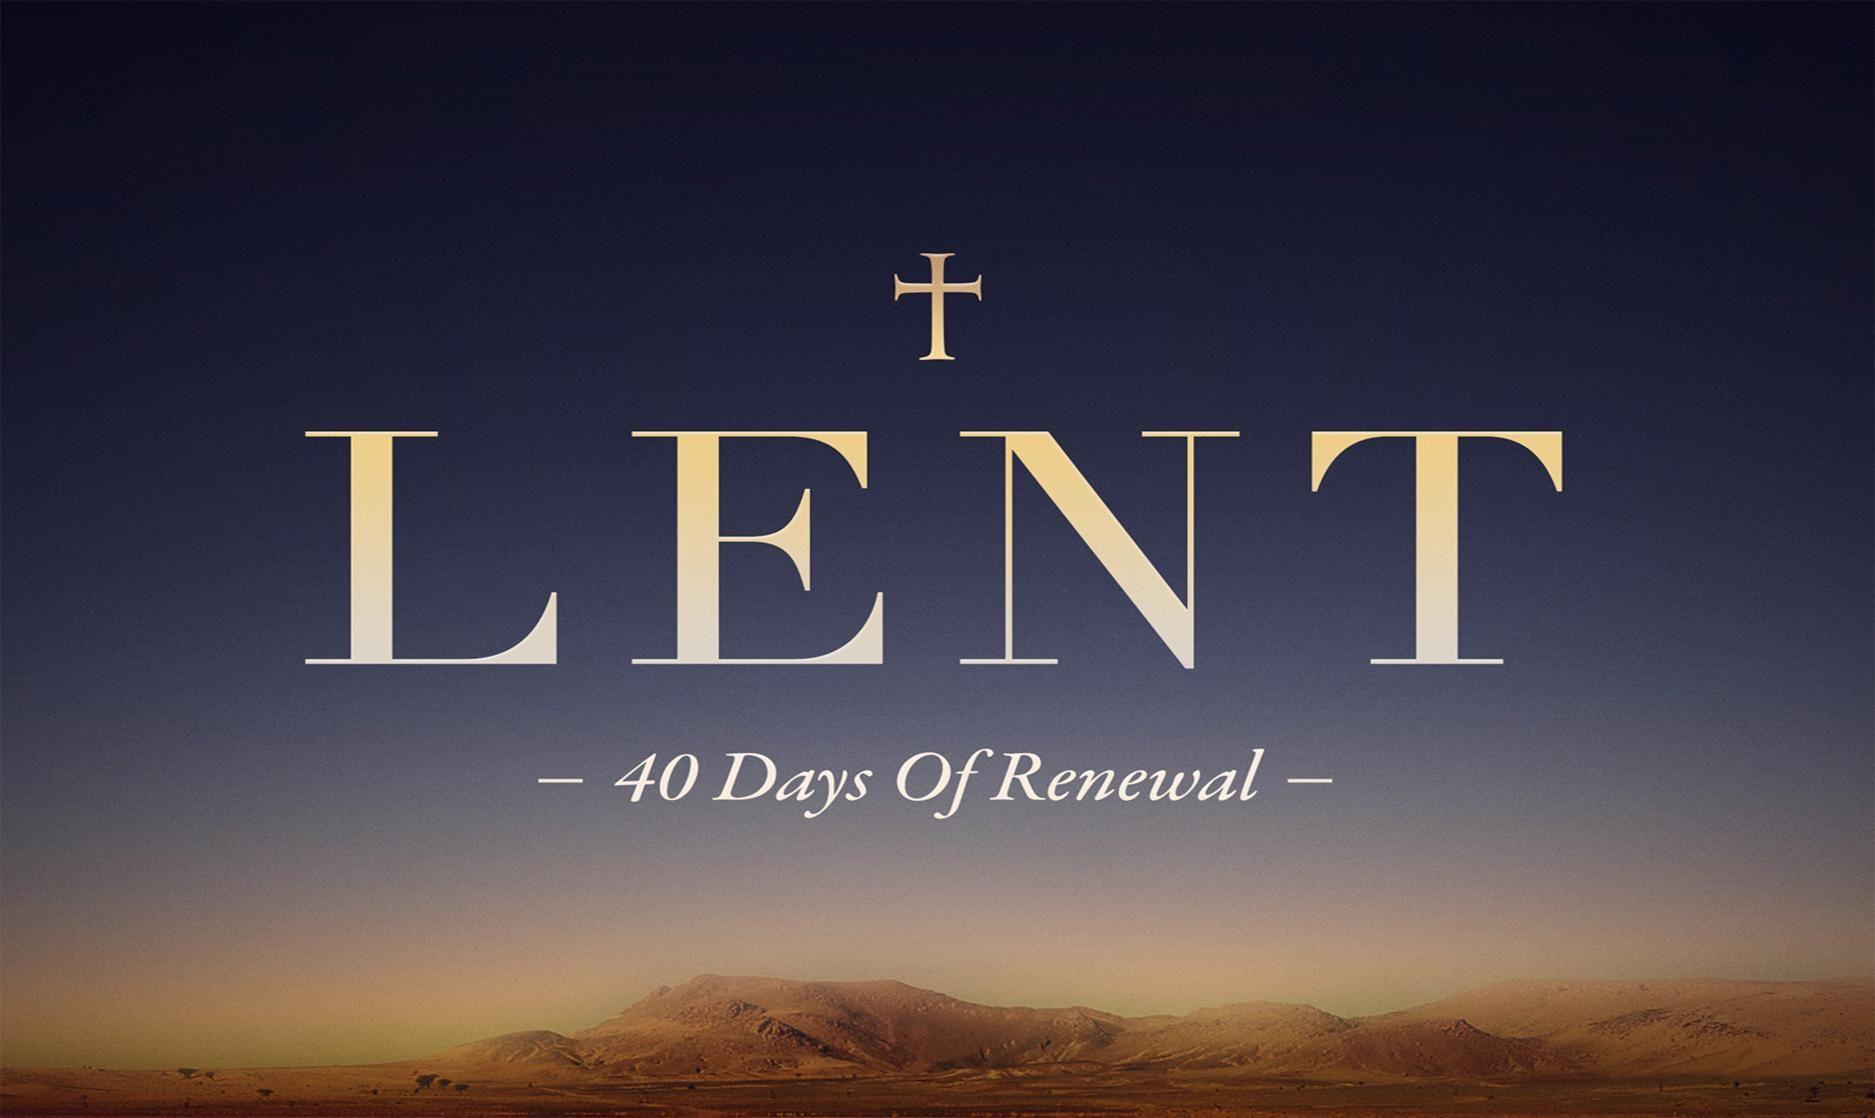 Lent Season 2018 HD Wallpaper & Image Download Free